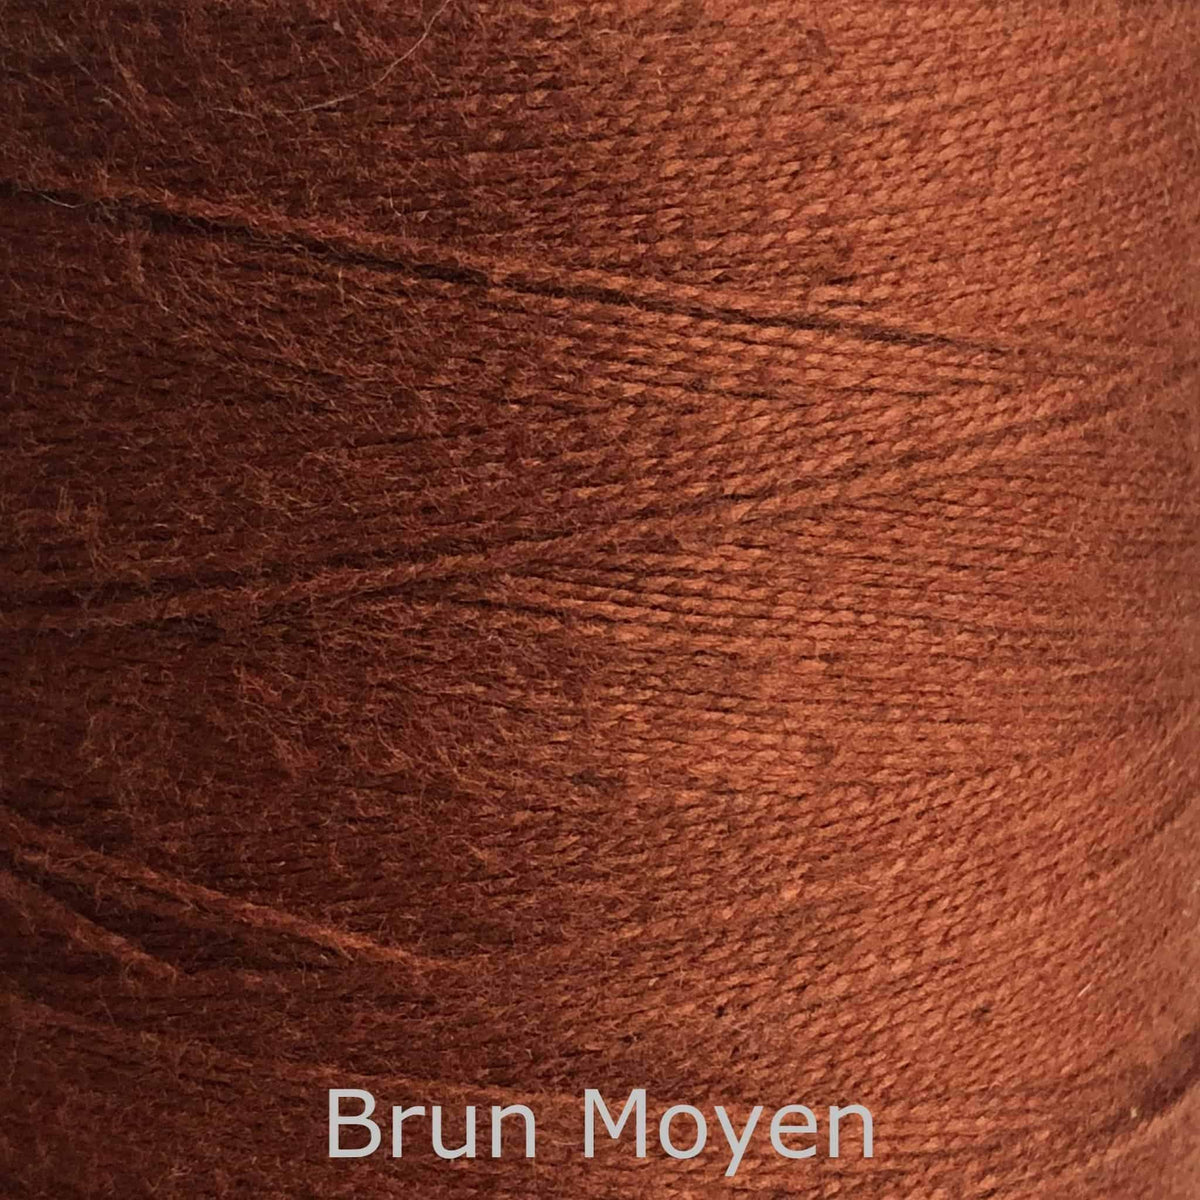 16/2 cotton weaving yarn brun moyen